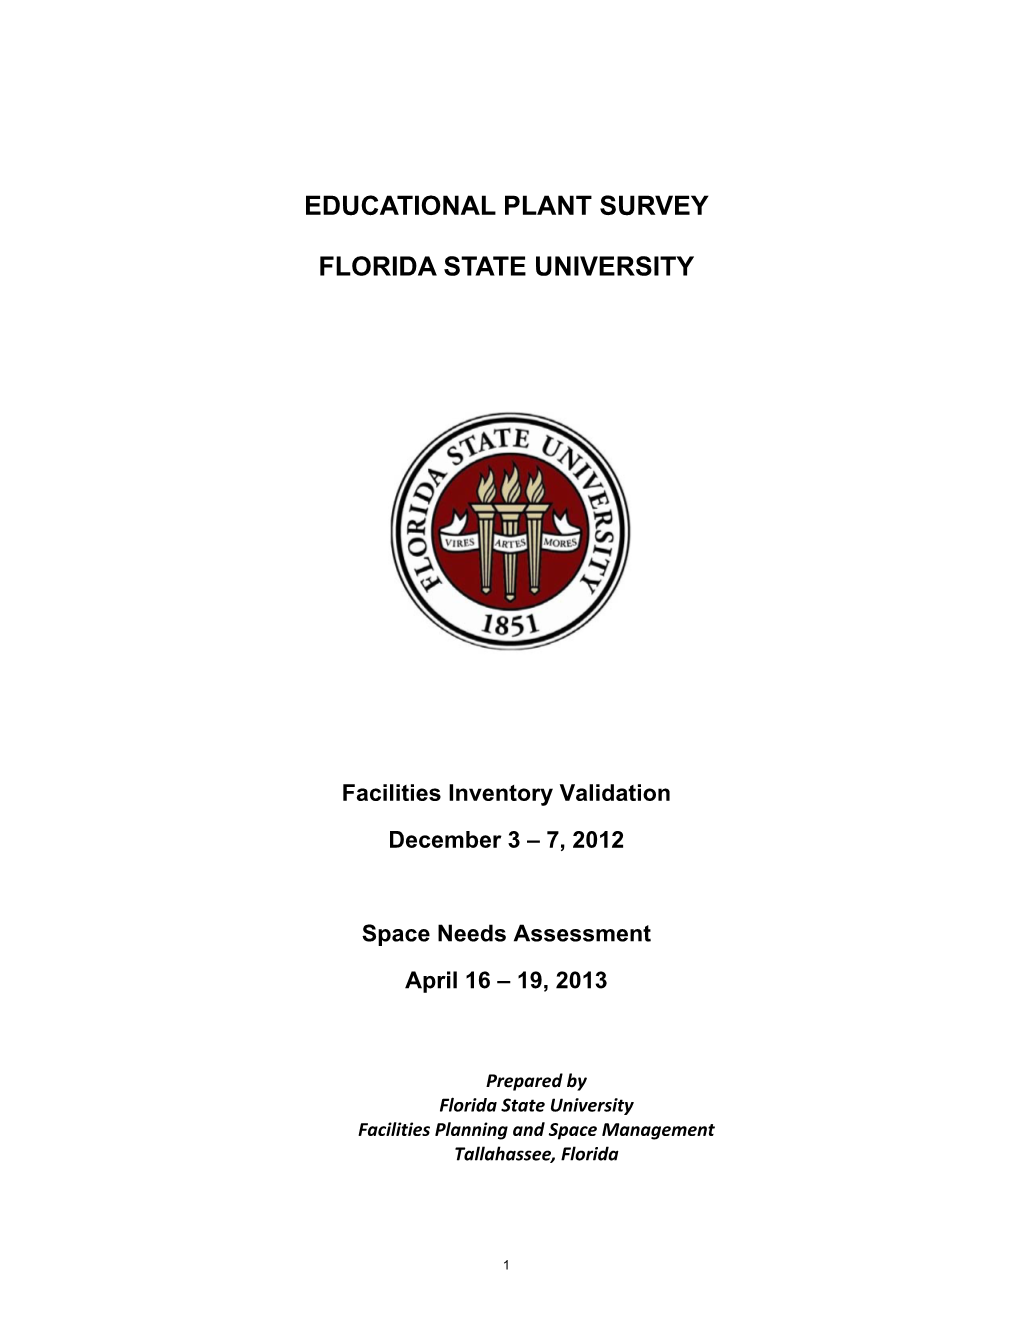 FSU Educational Plant Survey Report